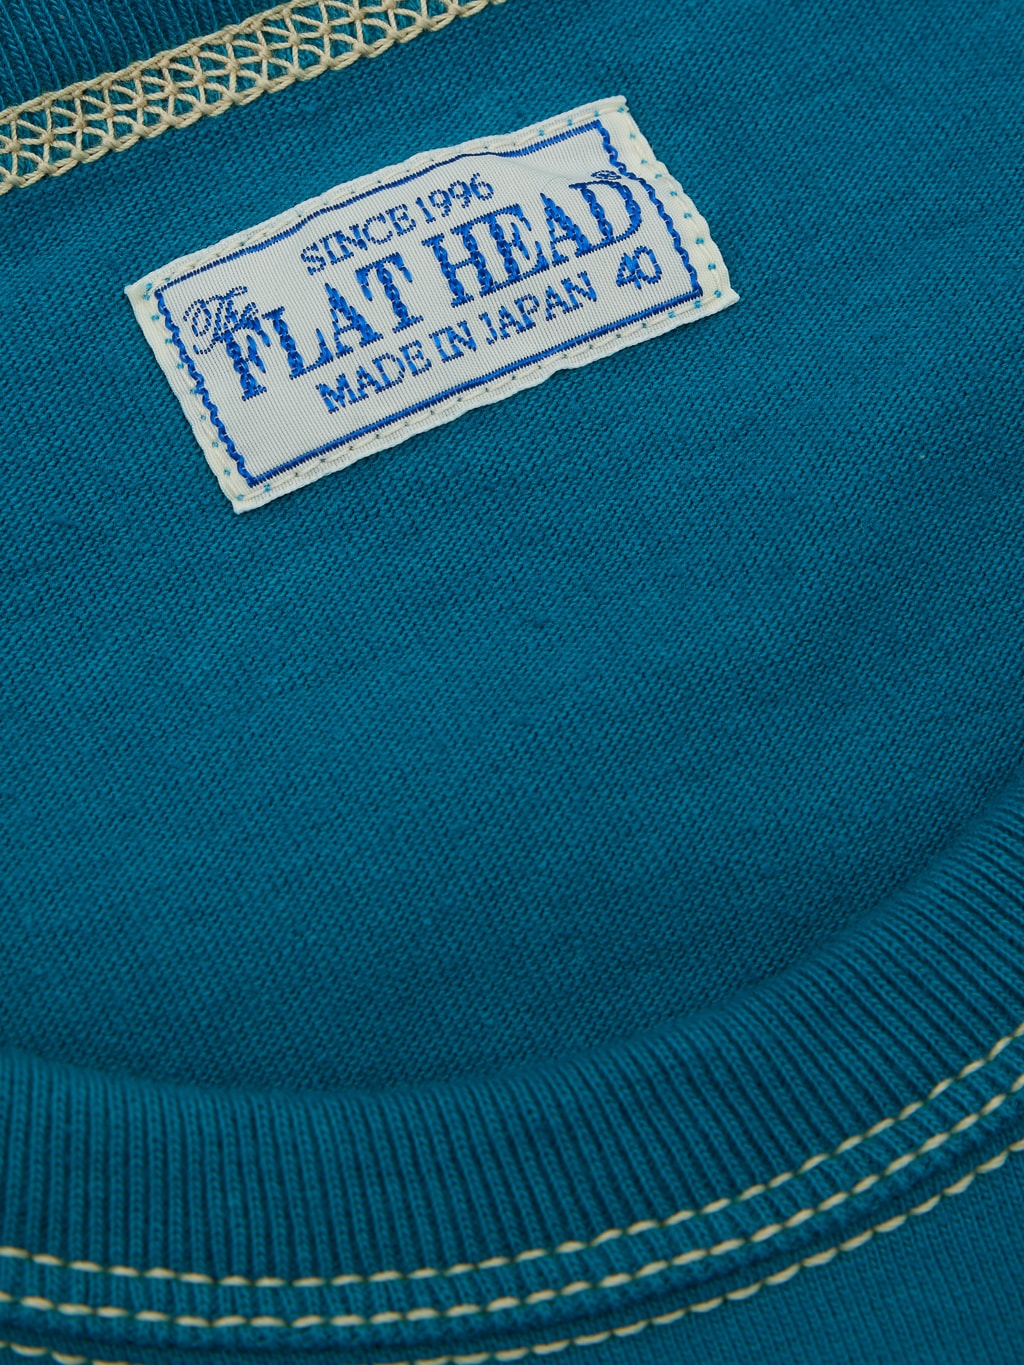 The Flat Head Plain Heavyweight TShirt turquoise interior tag